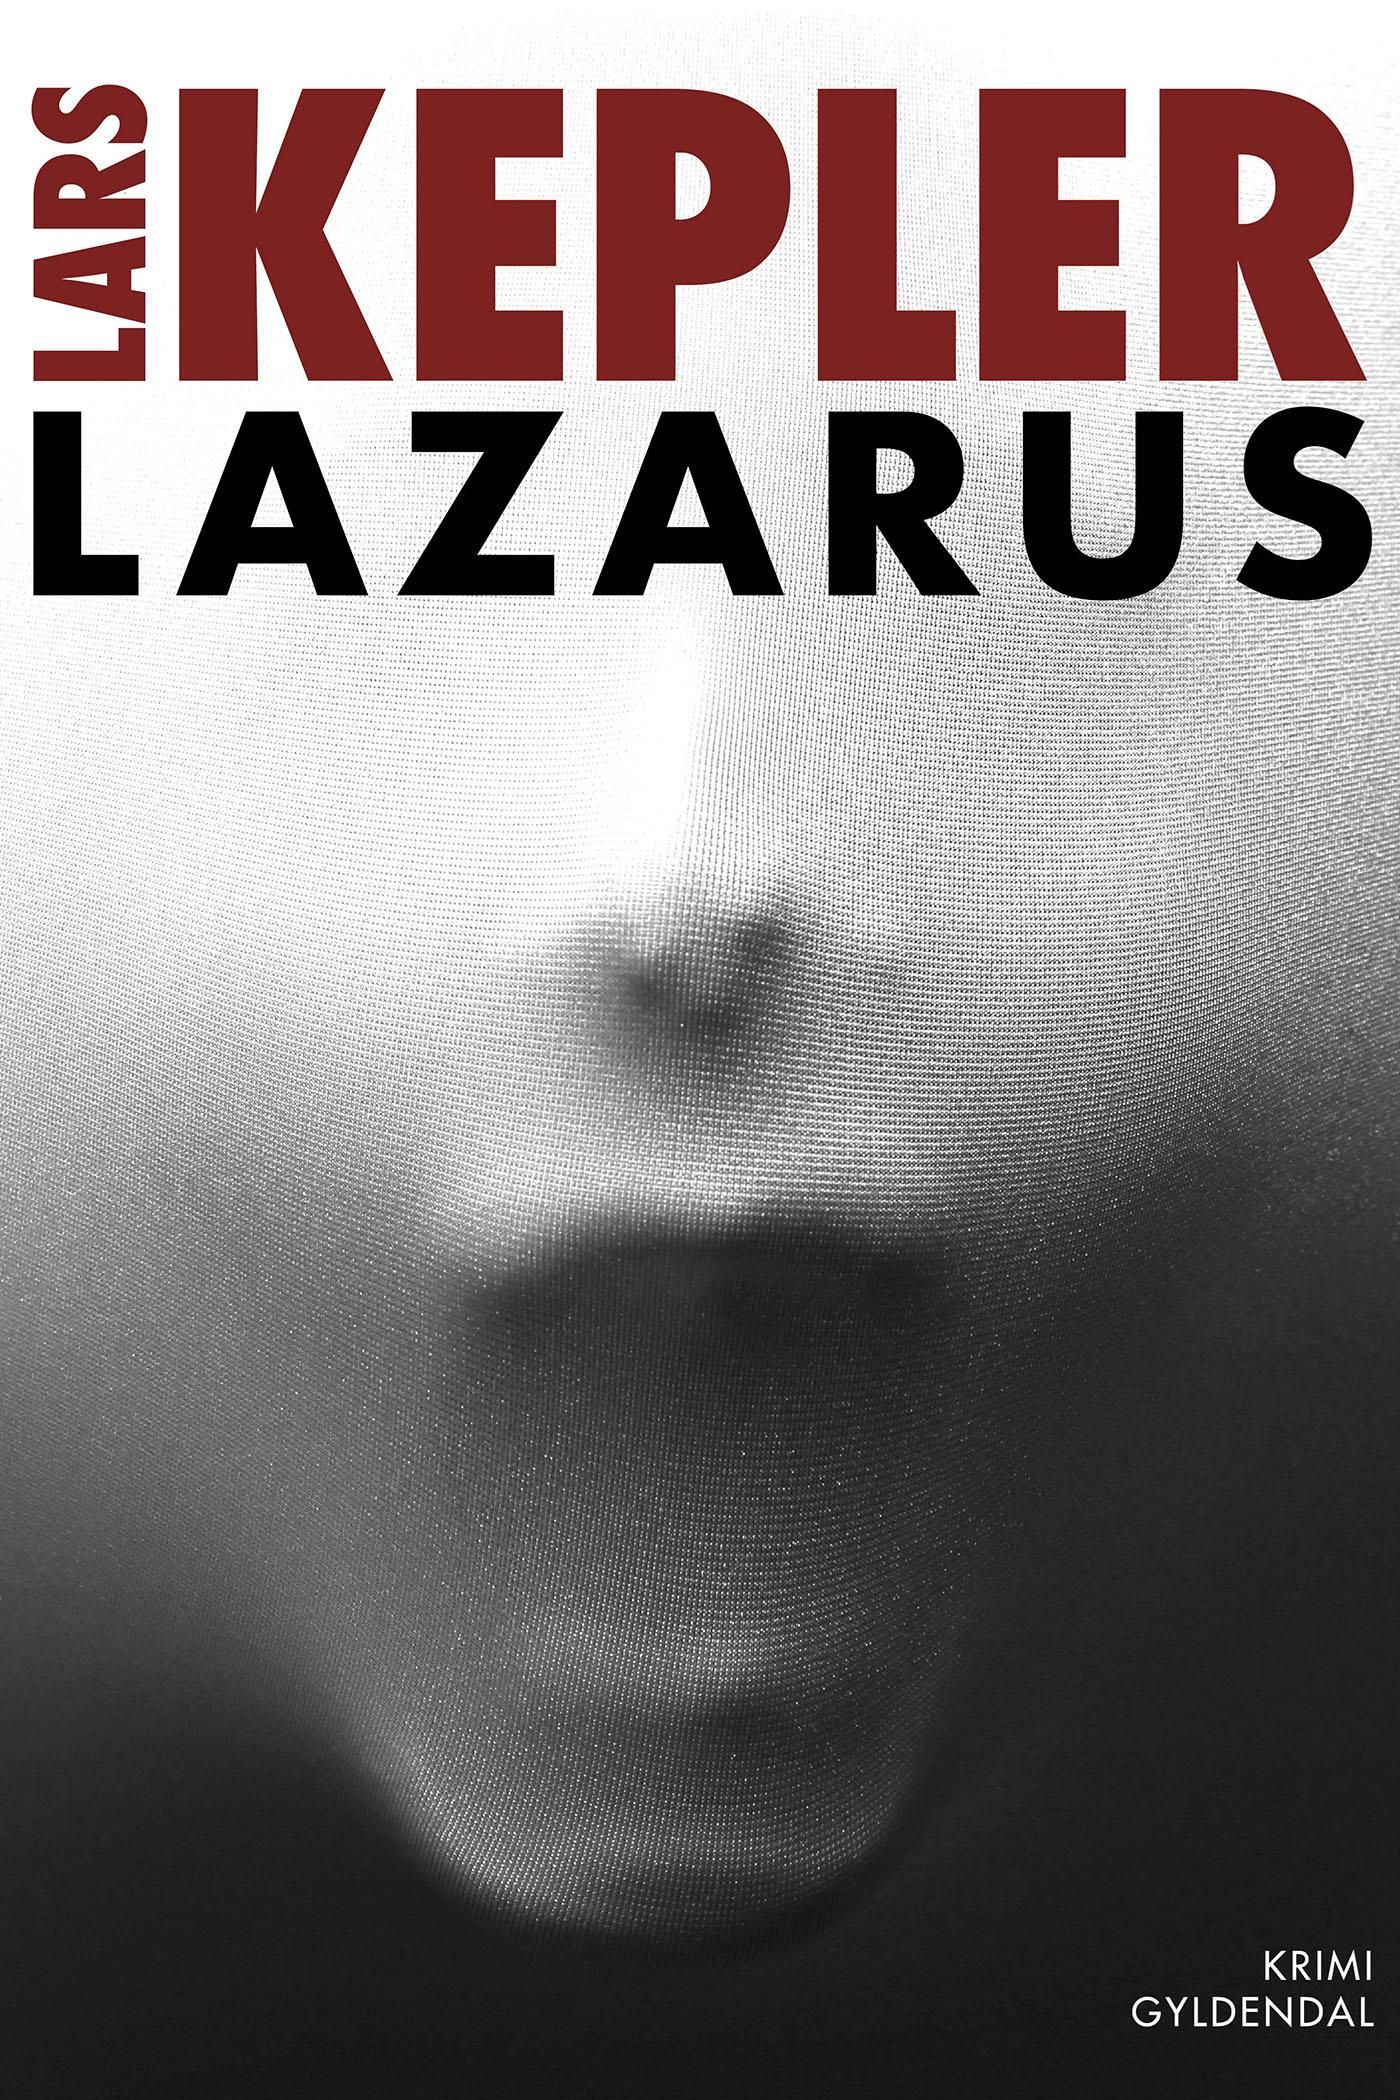 Lazarus, eBook by Lars Kepler